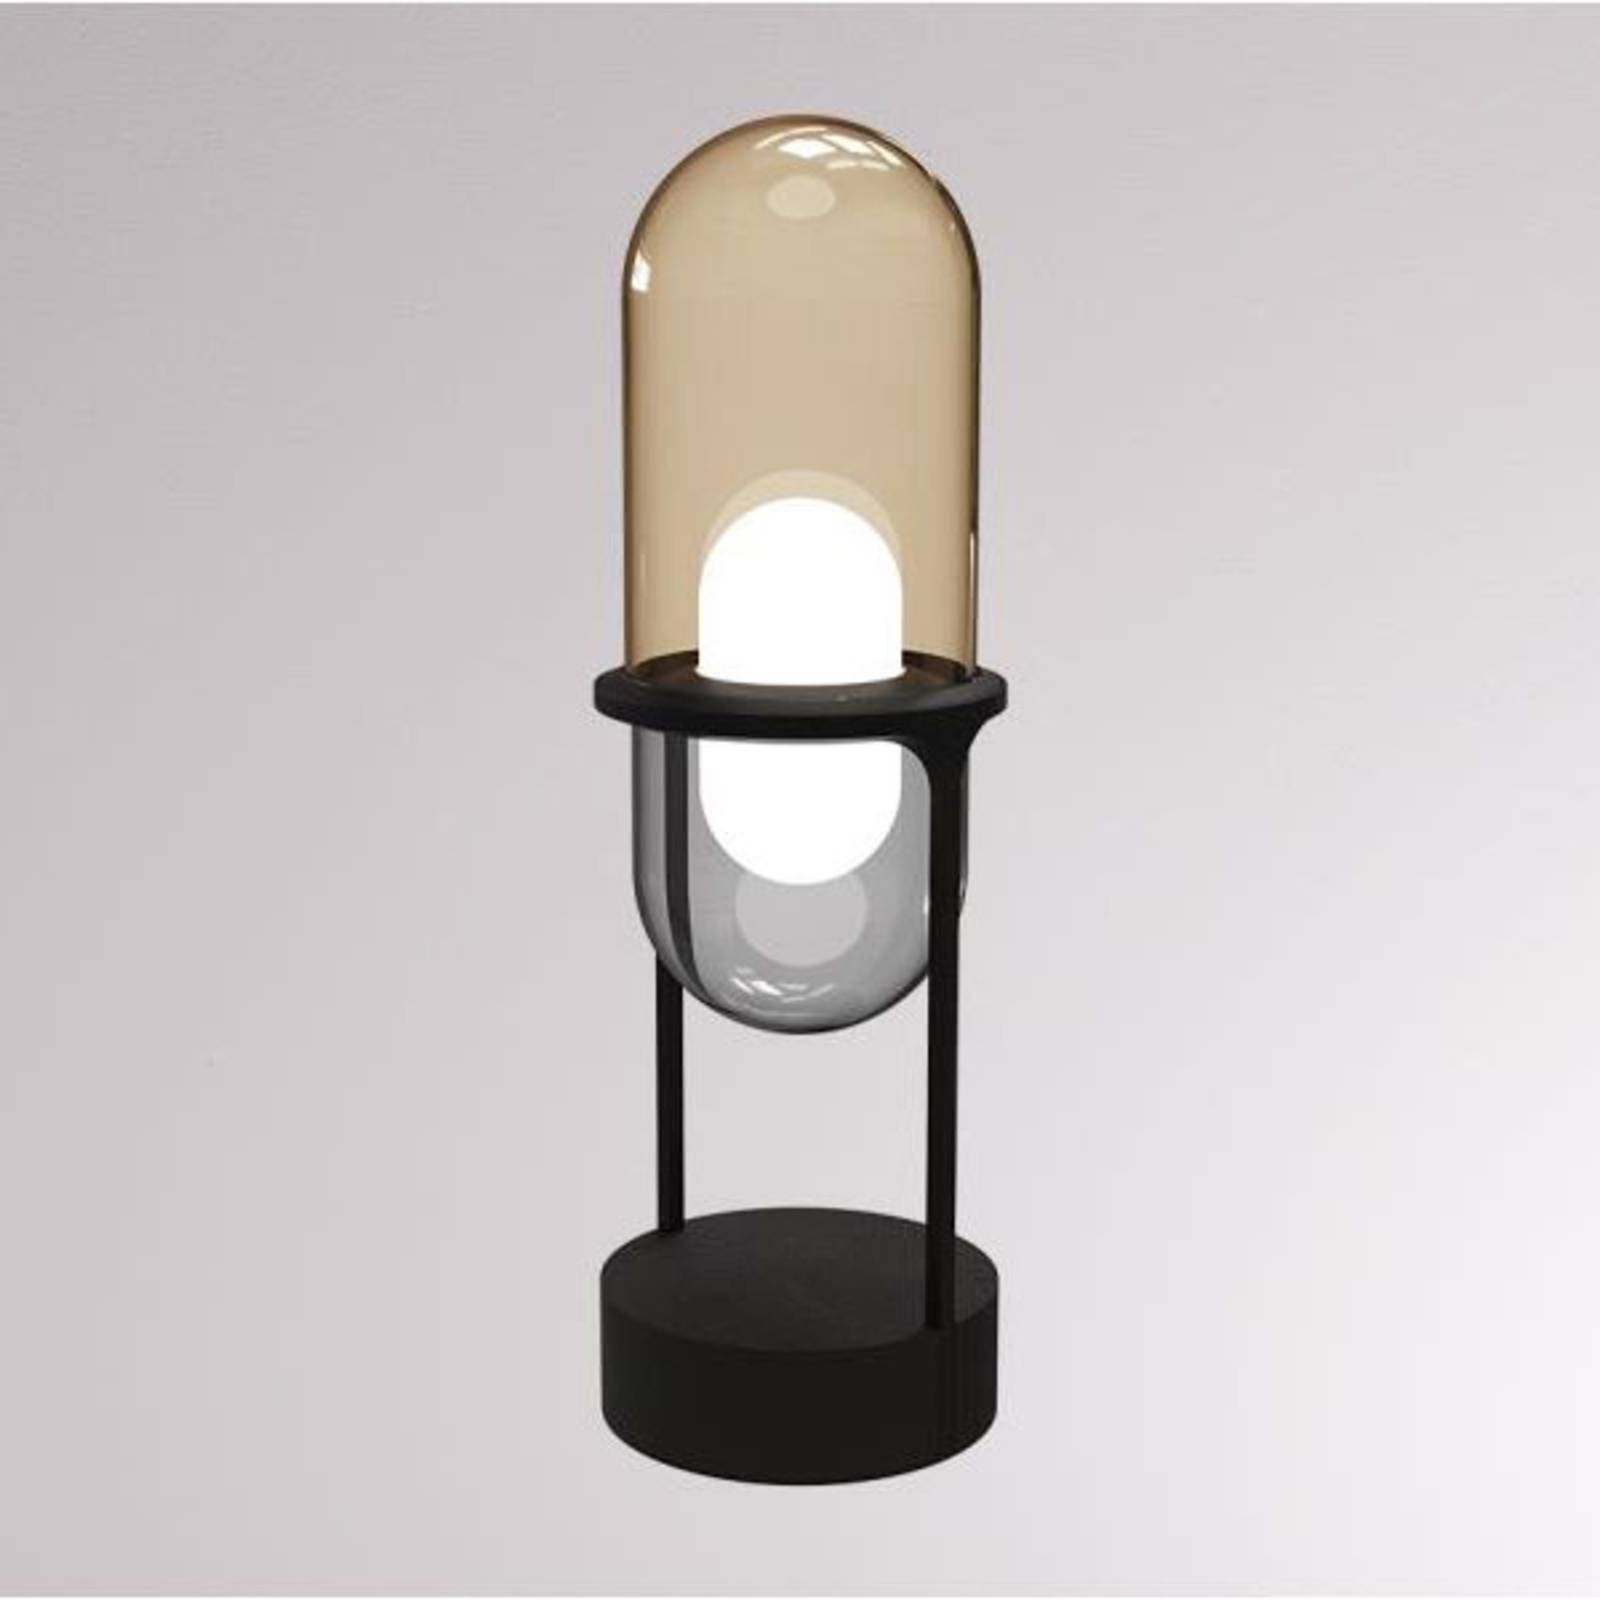 Pille lampe à poser LED champagne/grise